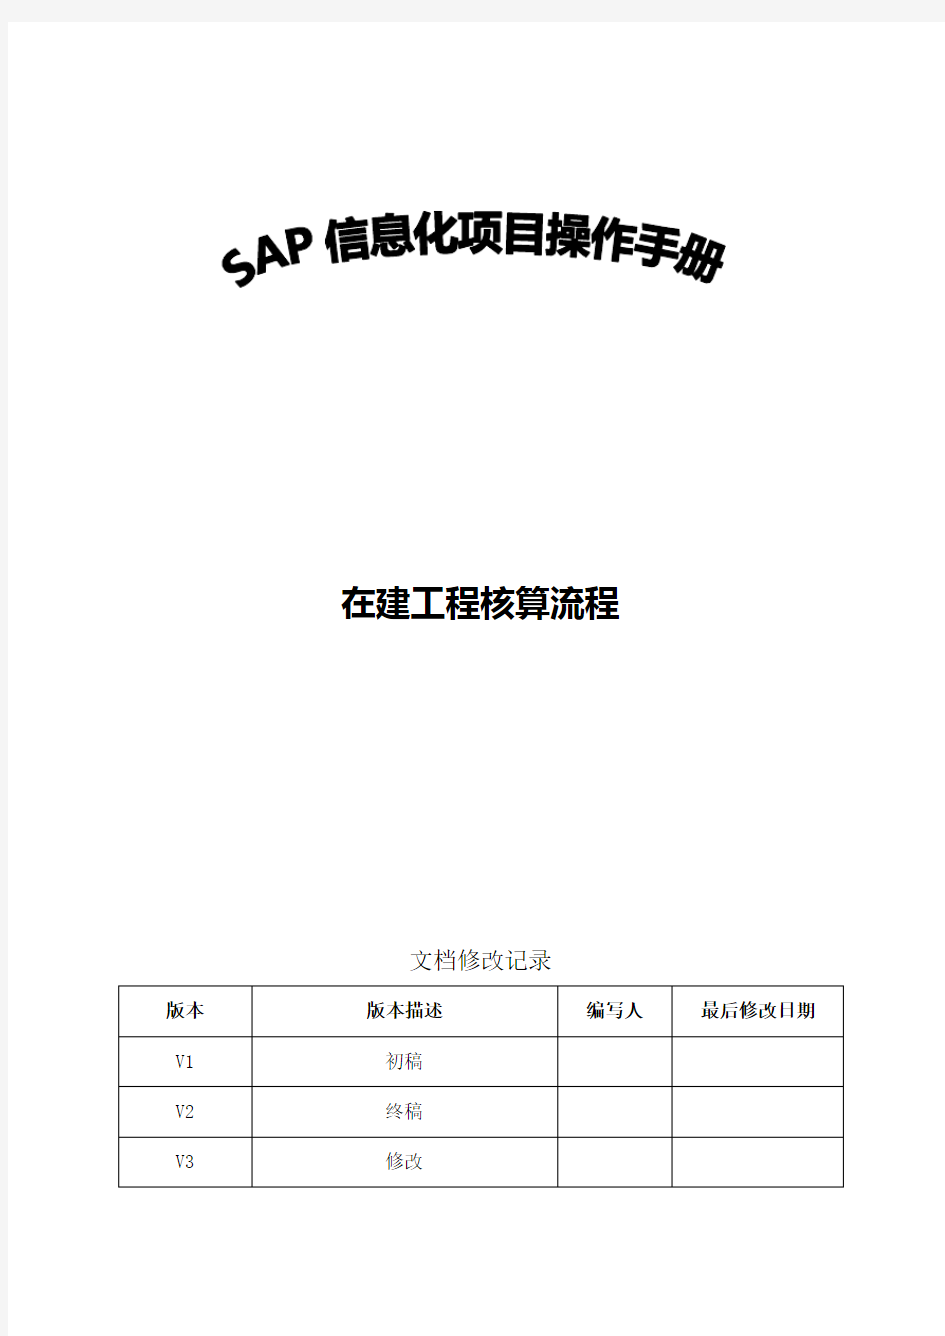 SAP操作手册_FICO_在建工程核算流程